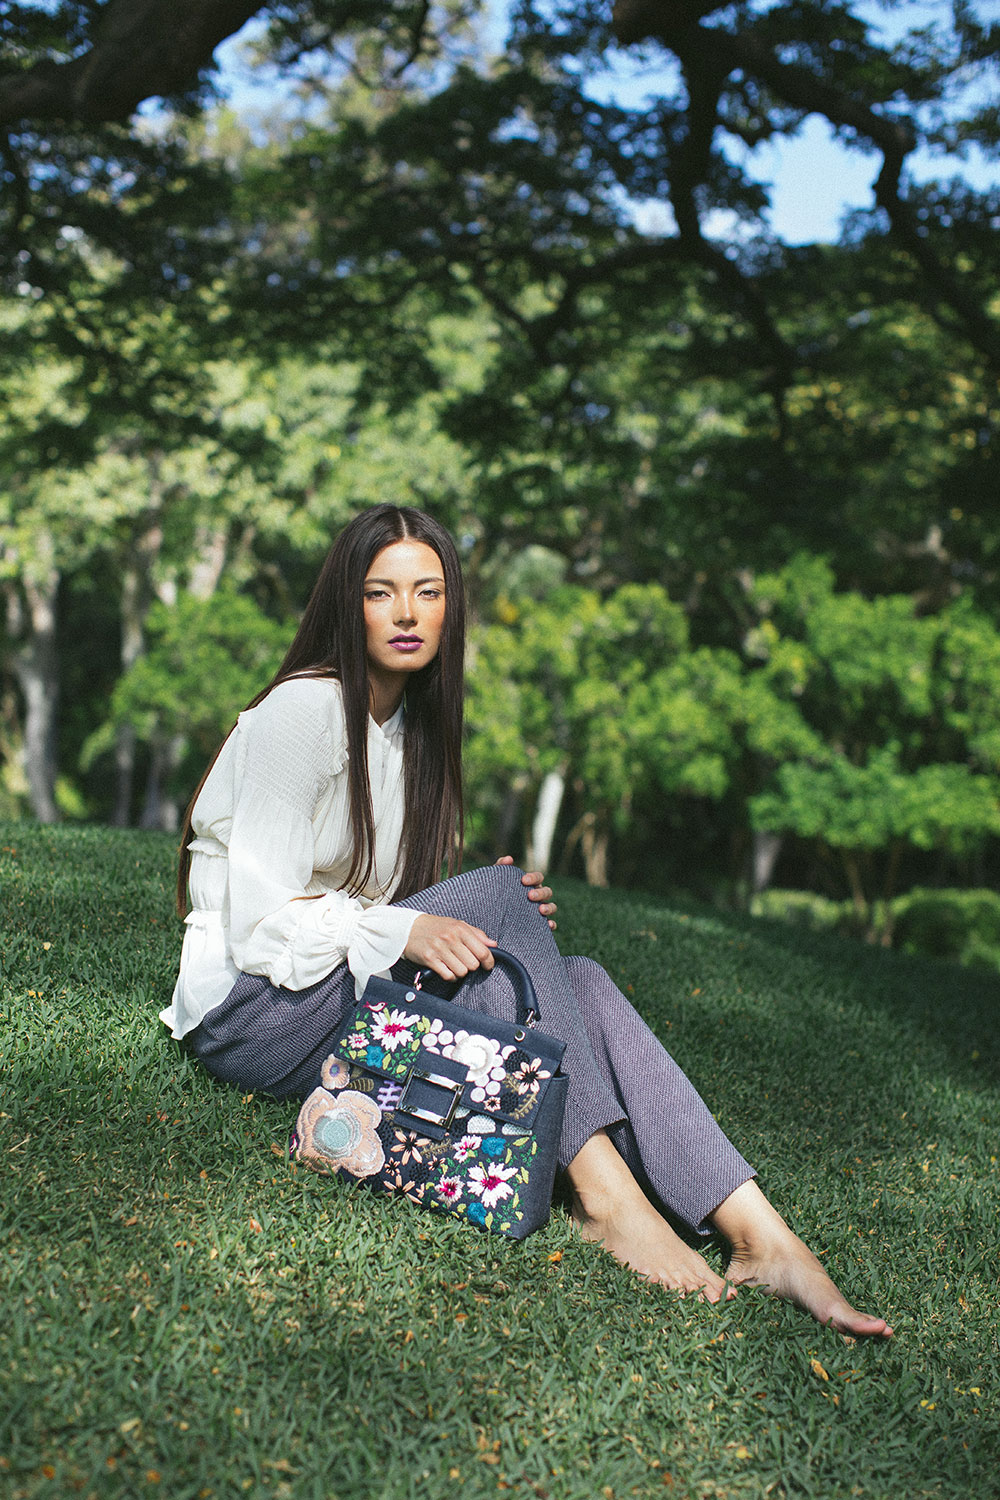 Model sitting in grass with denim handbag